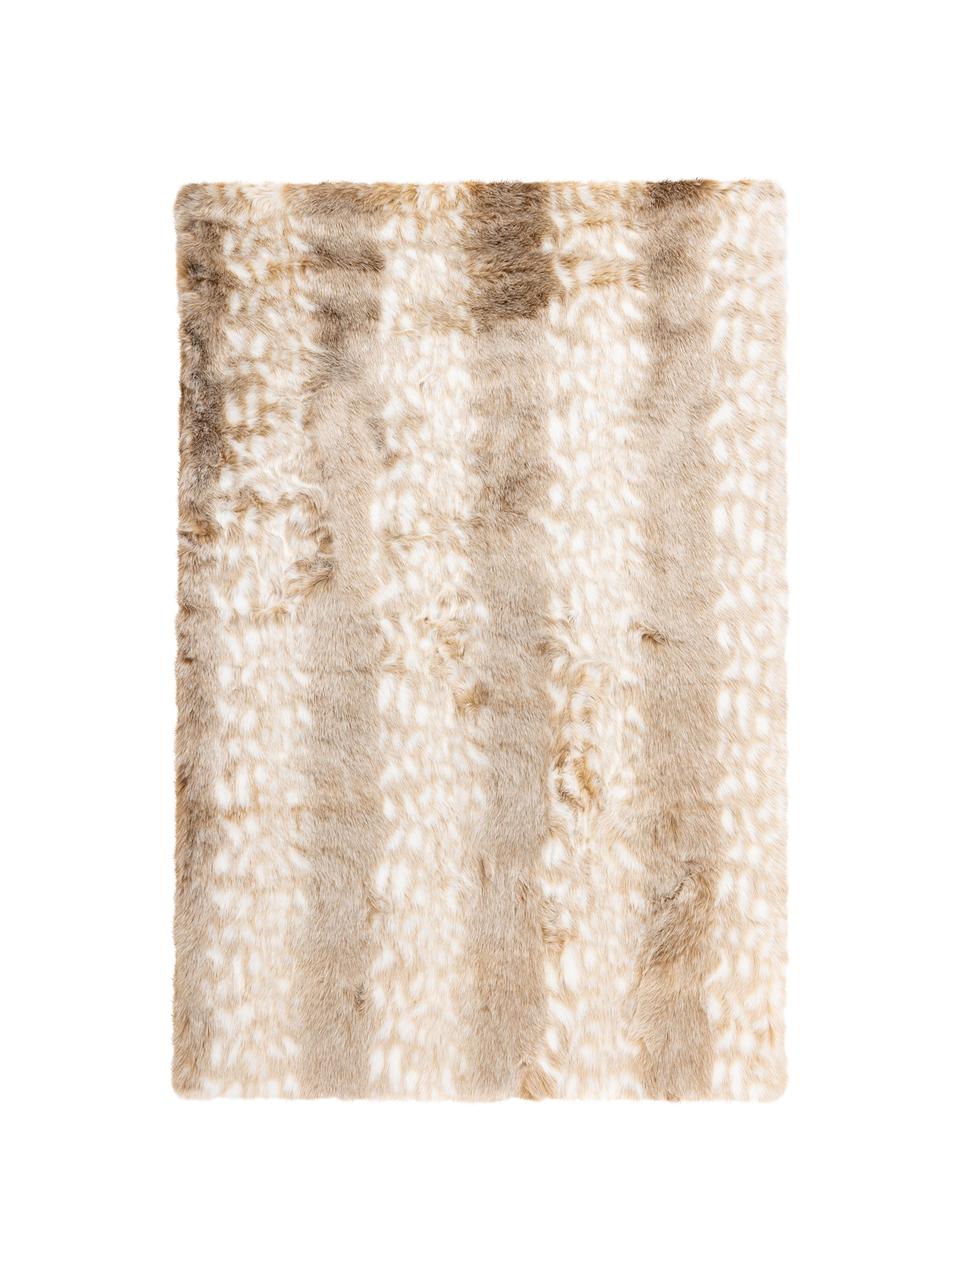 Pluizig hoogpolig vloerkleed Rumba, Bovenzijde: 80% acryl, 20% polyester, Onderzijde: polyester fleece, Beige, crèmewit, B 80 x L 150 cm (maat XS)